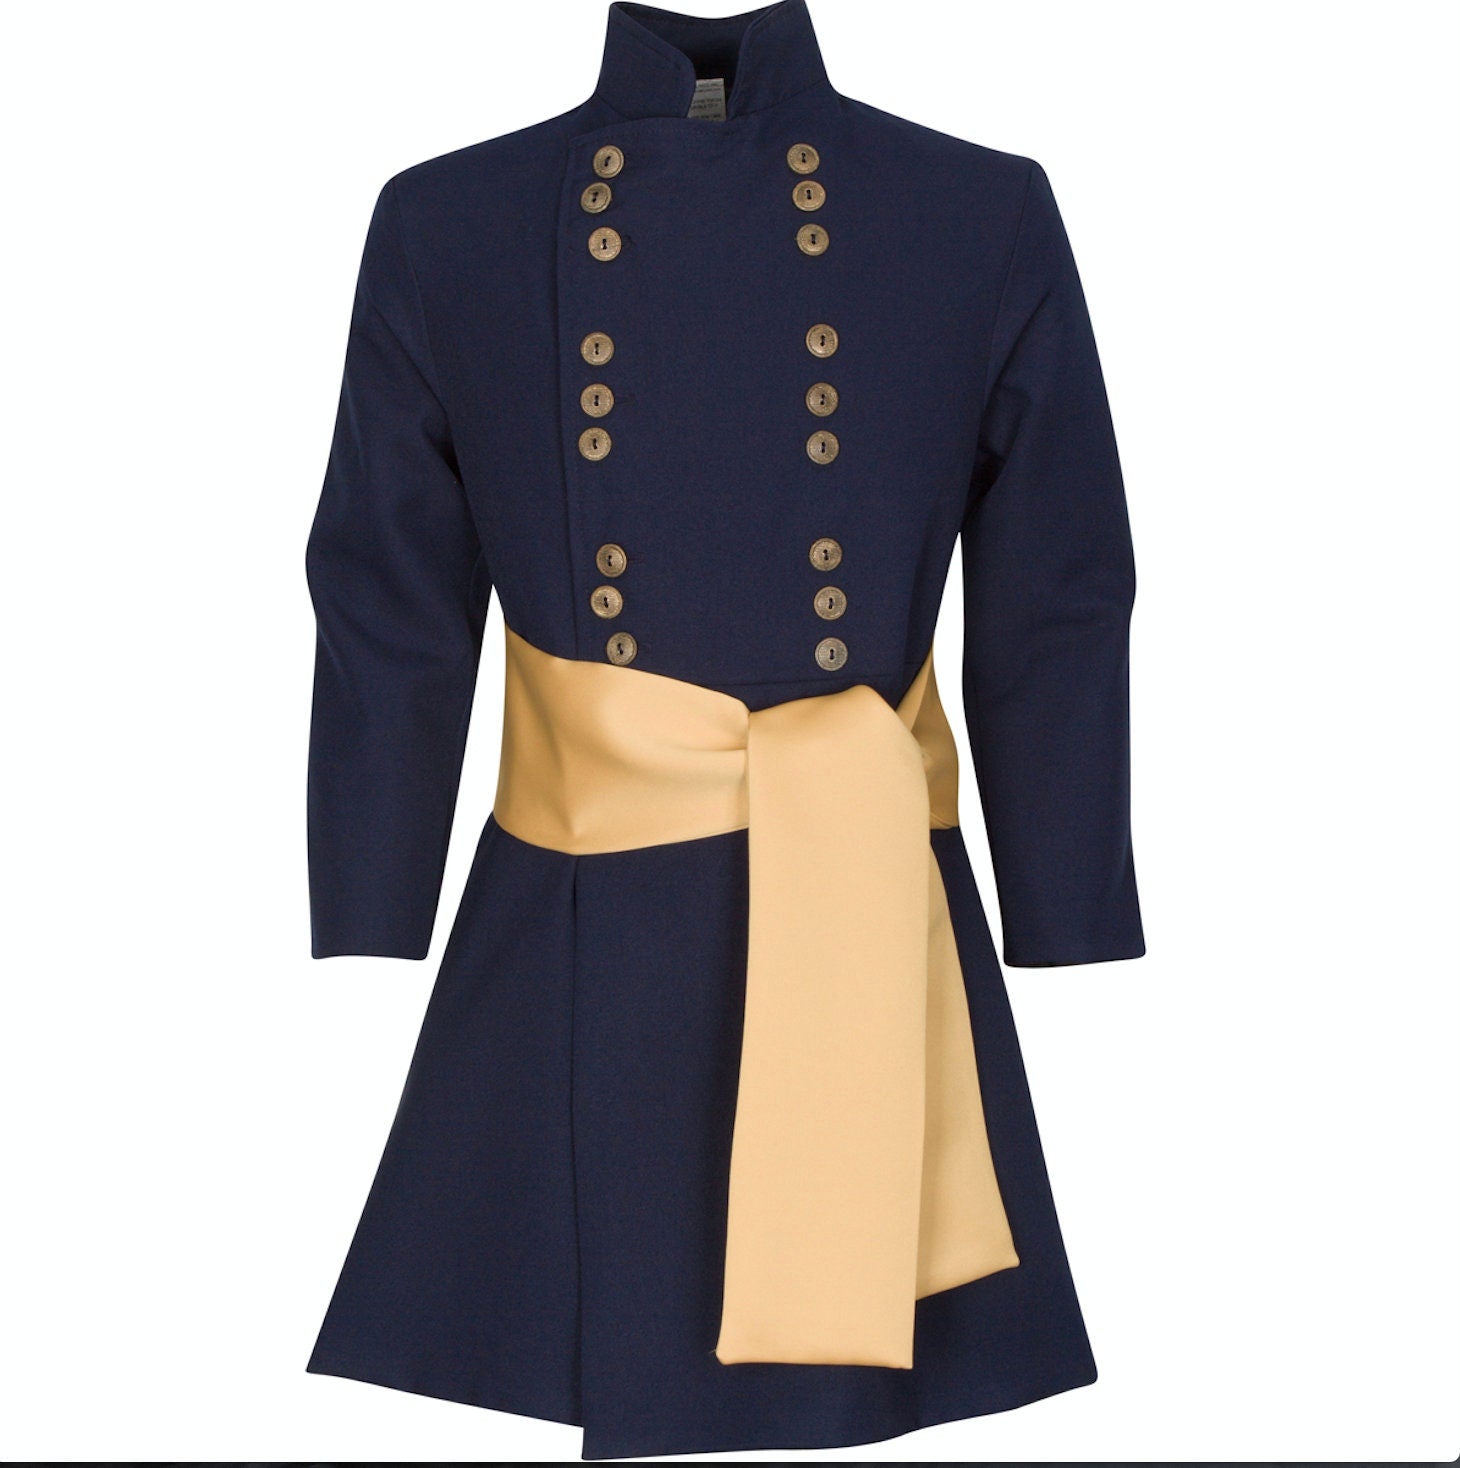 War of 1812 Uniform 12th President of America Zachary Taylor Military Uniform